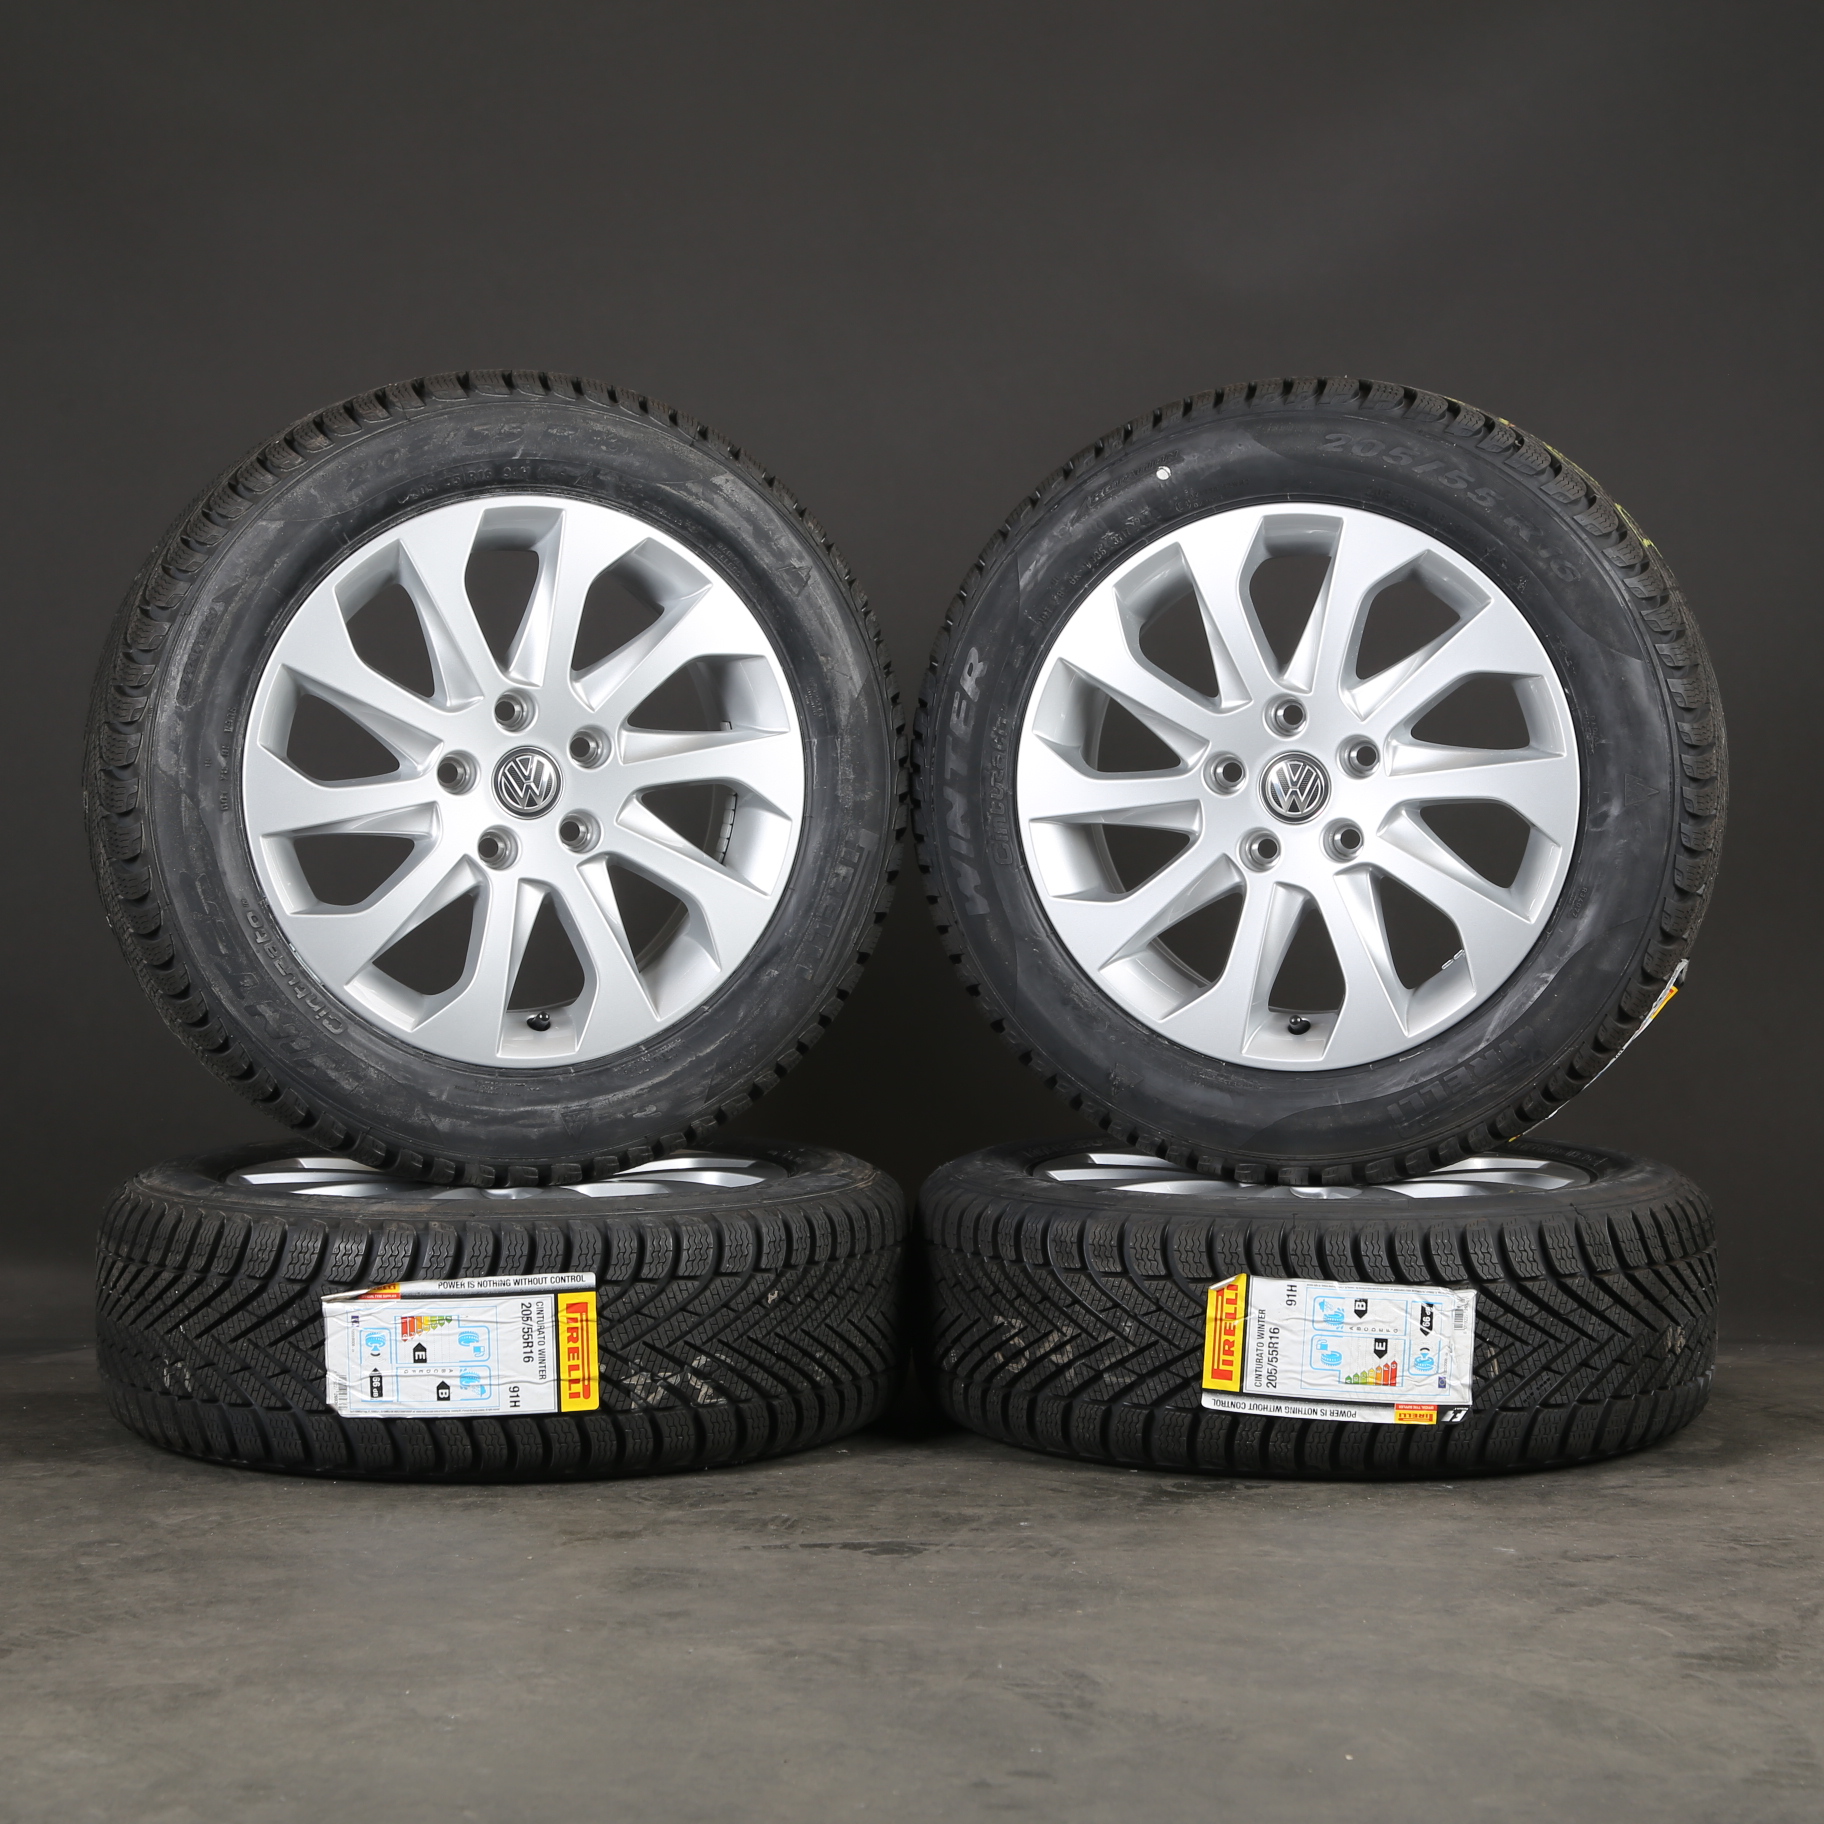 VIII VII 16 inch winter 7 tires winter Golf wheels VW 8